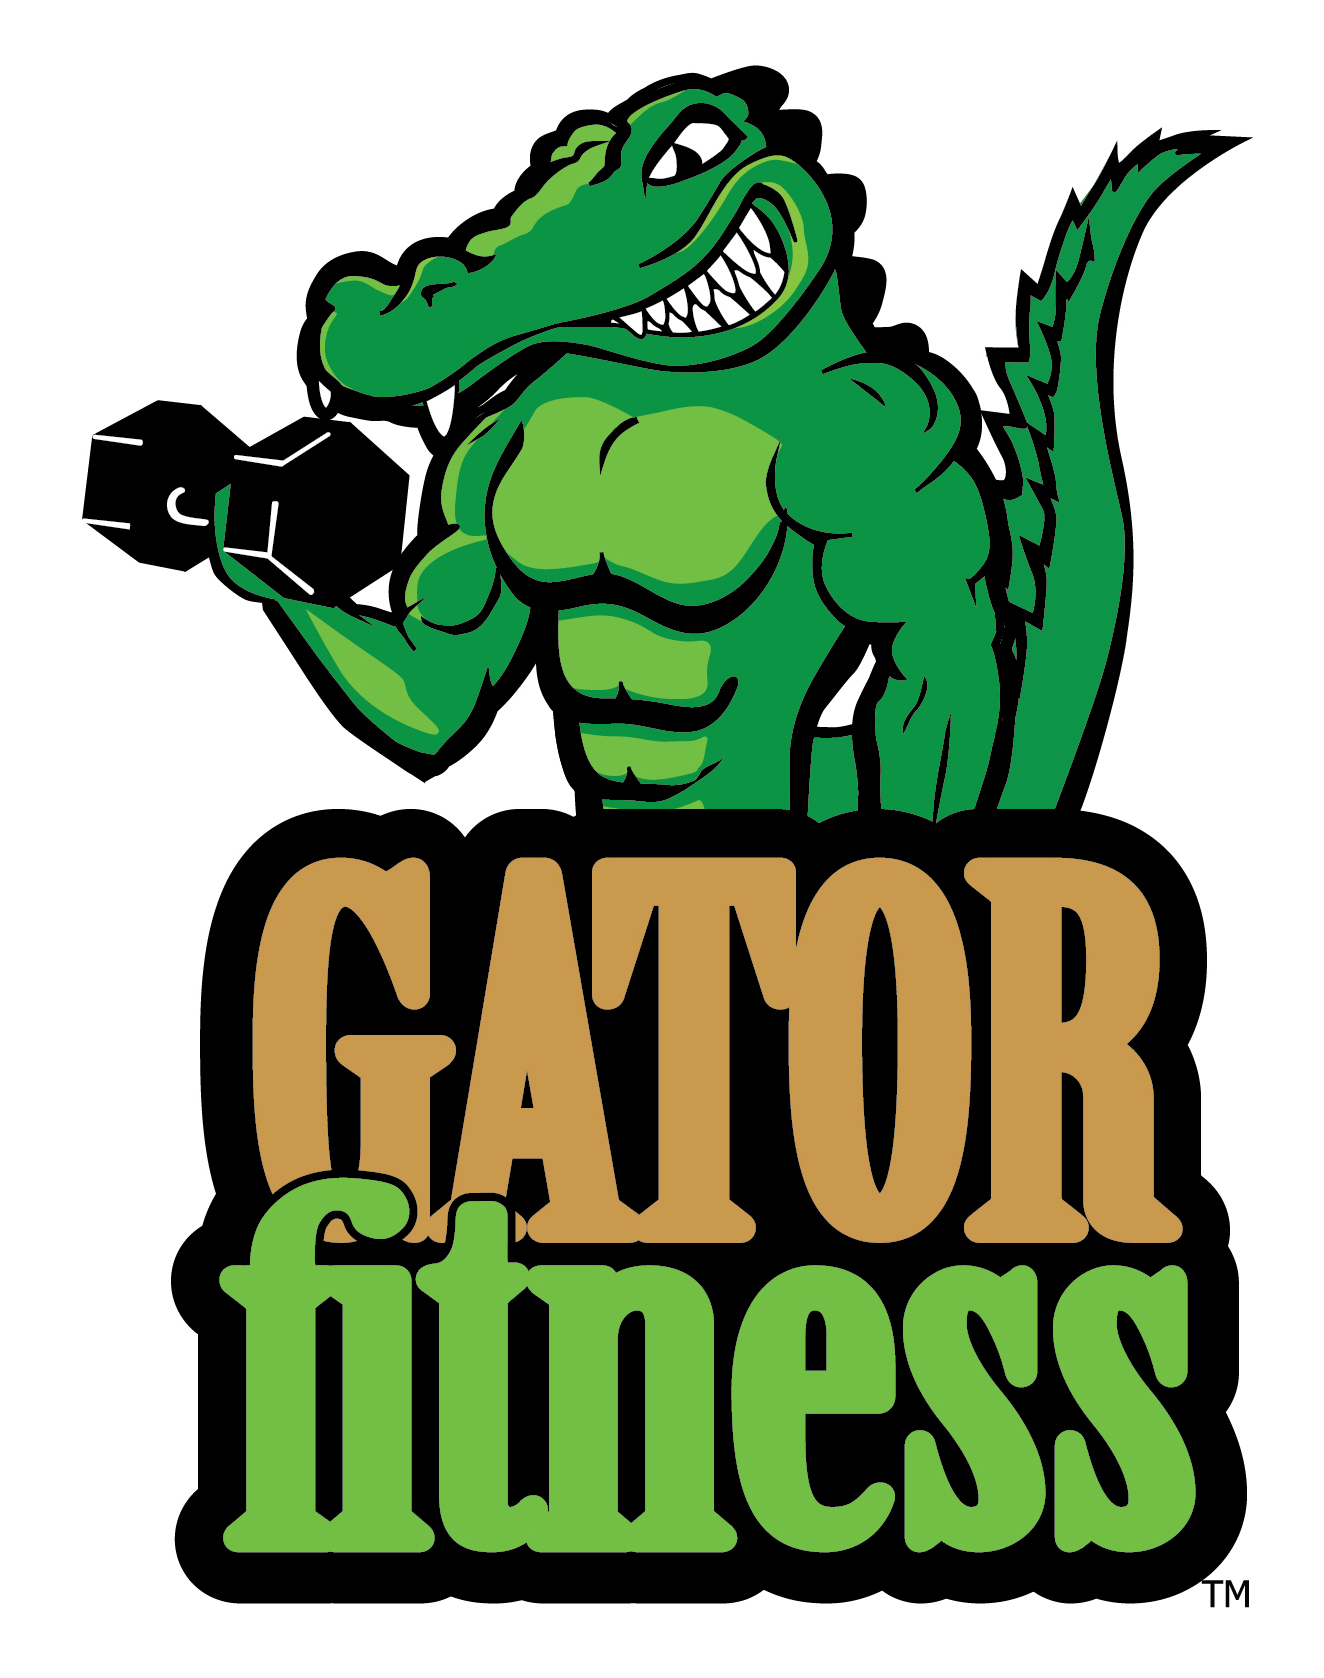 gator fitness logo